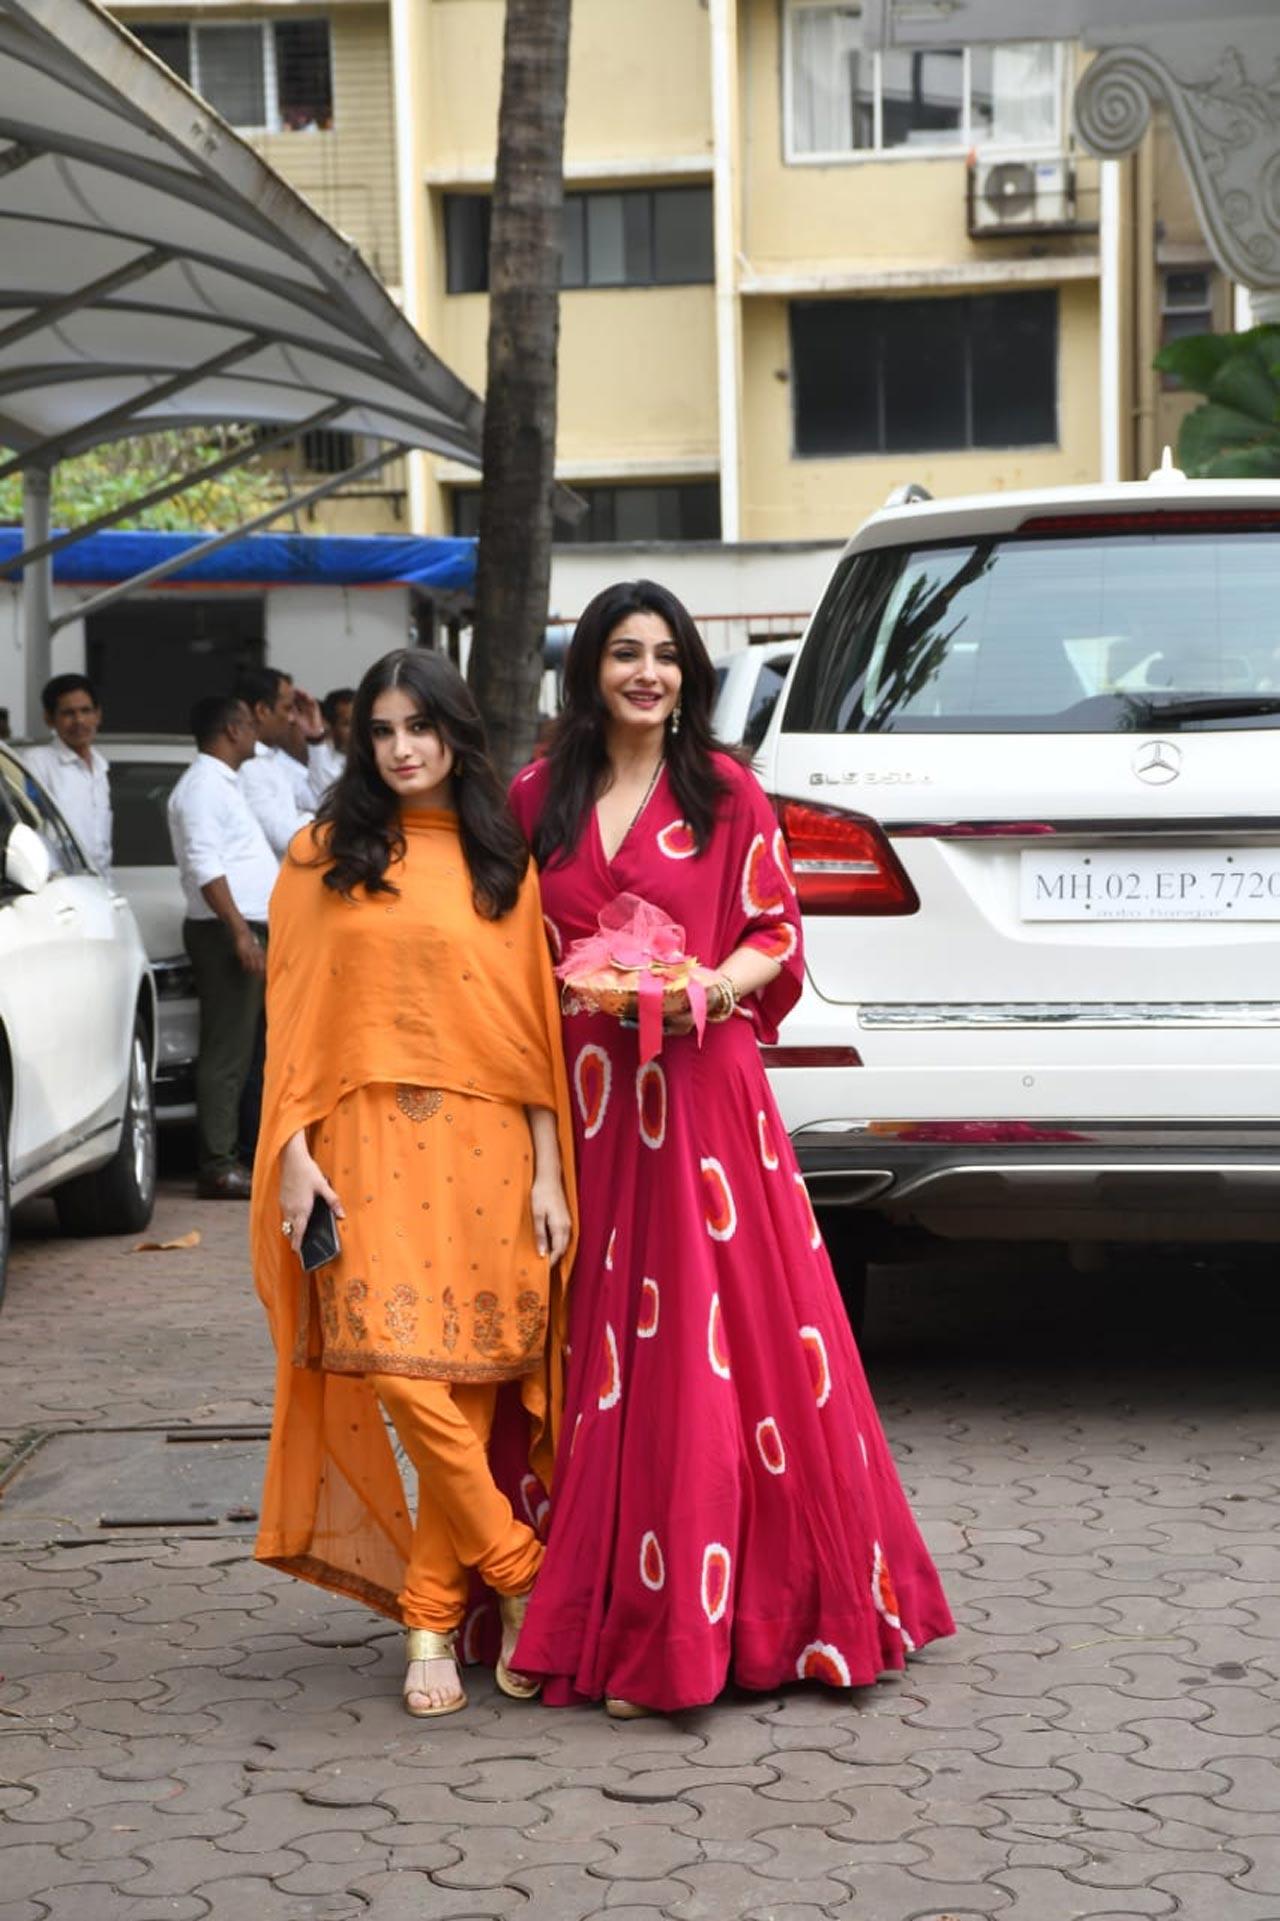 Raveena Tandon and her daughter Rasha Thadani showed off their million-dollar smile as they attended Shilpa Shetty's Ganeshotsav